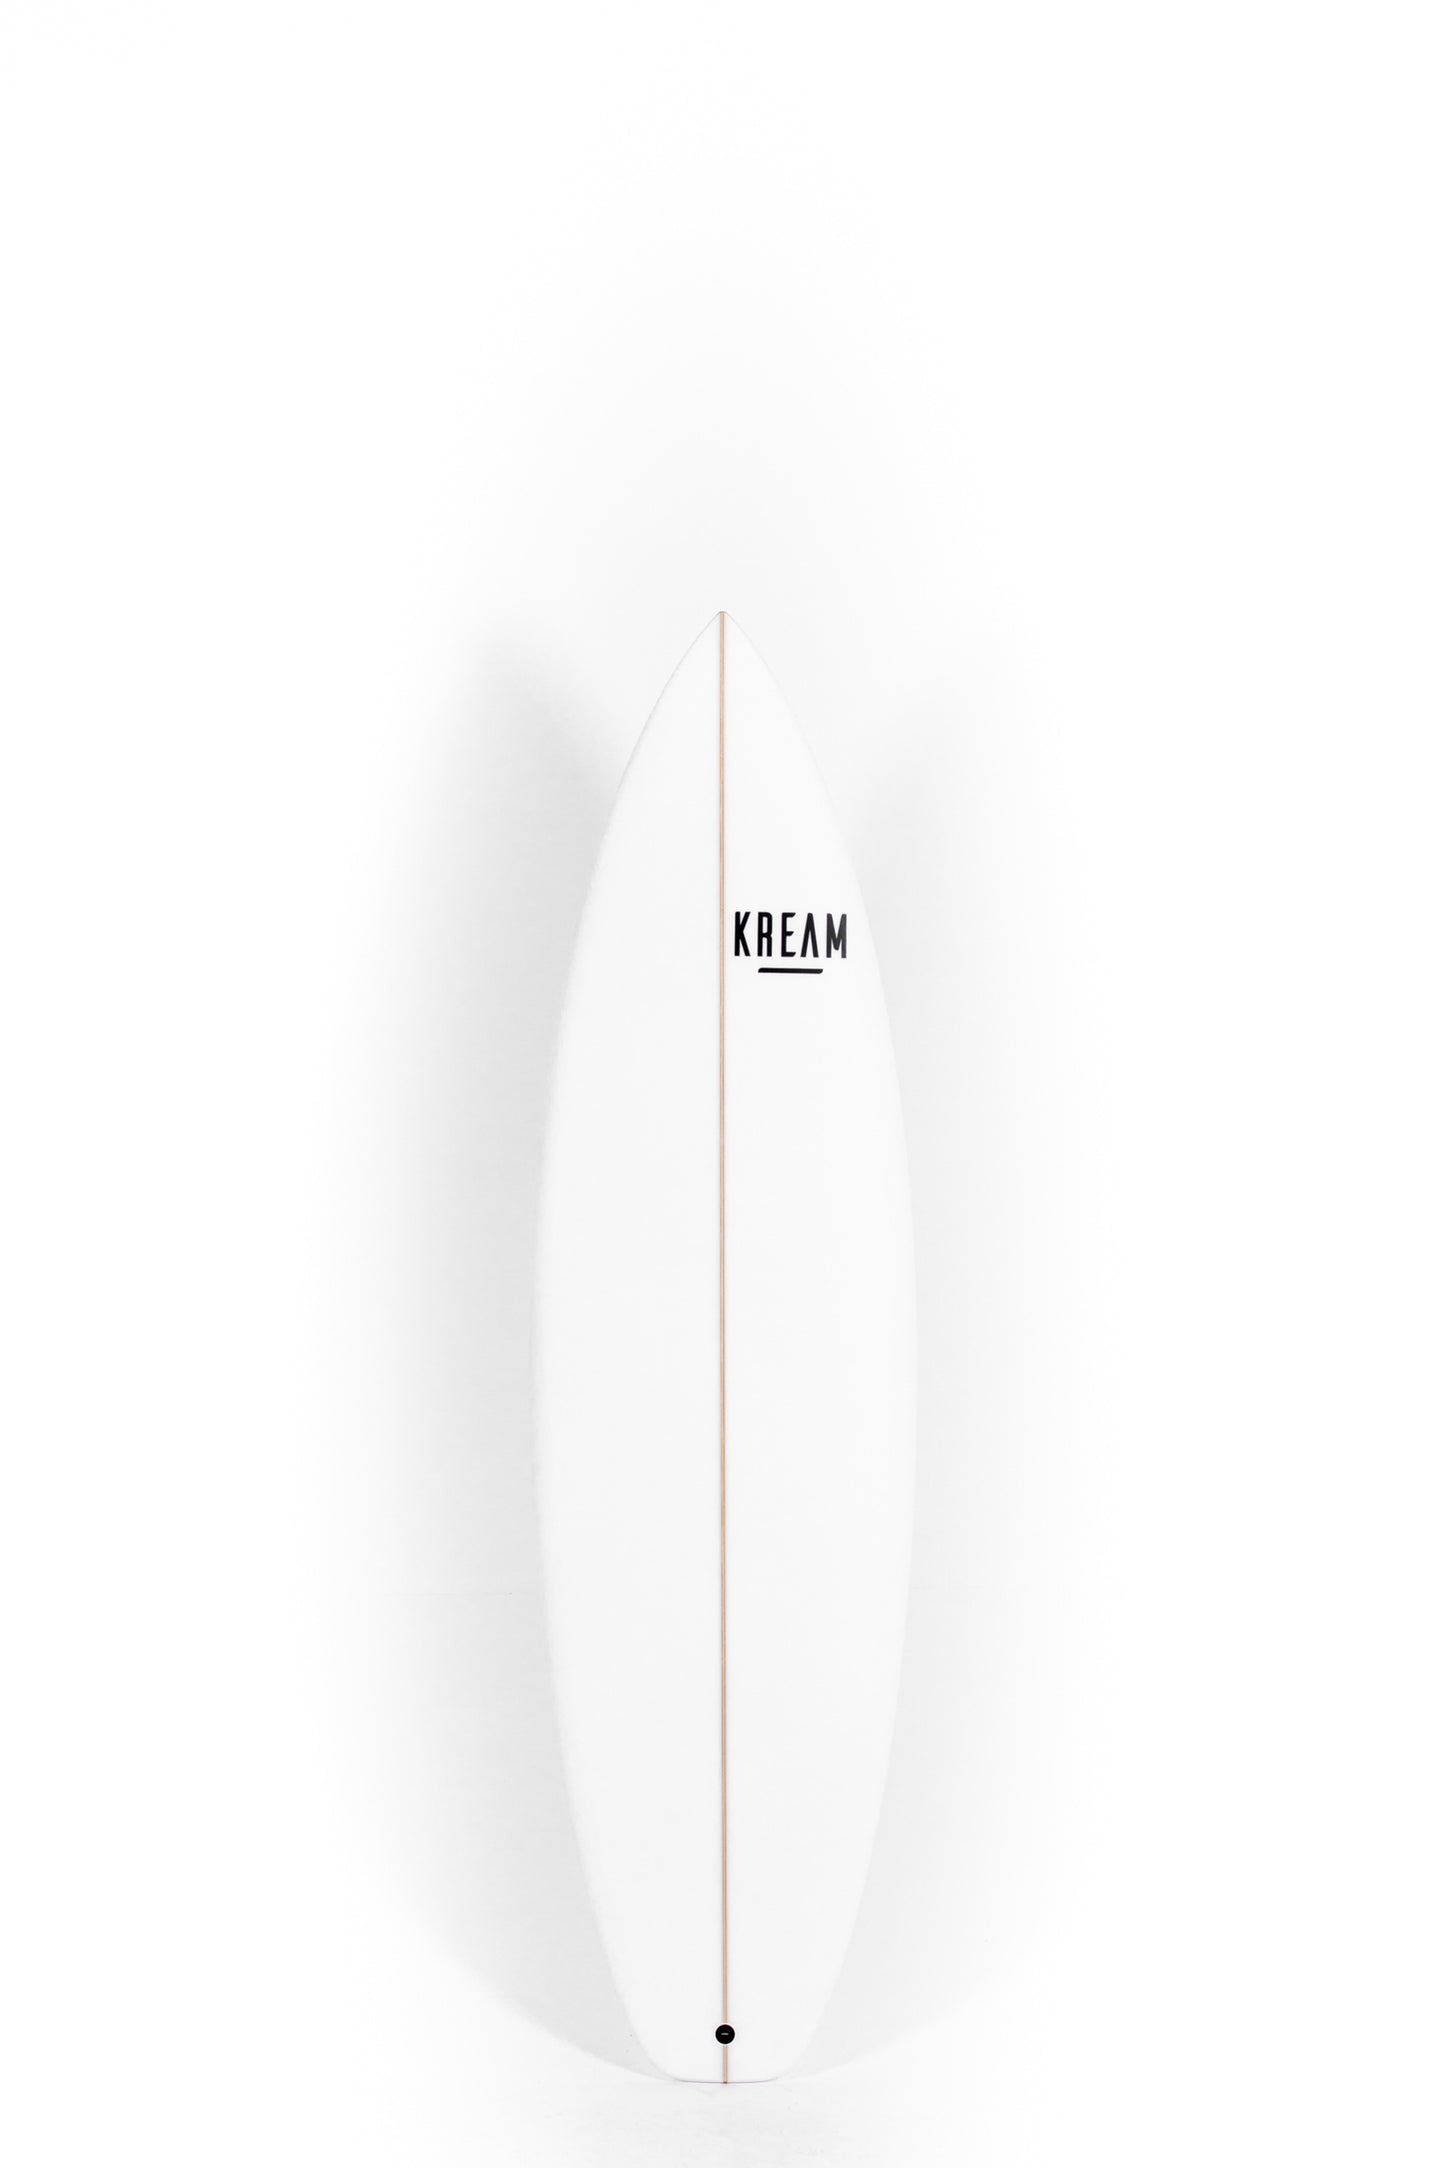 Pukas-Surf-Shop-Kream-Surfboards-Wolf